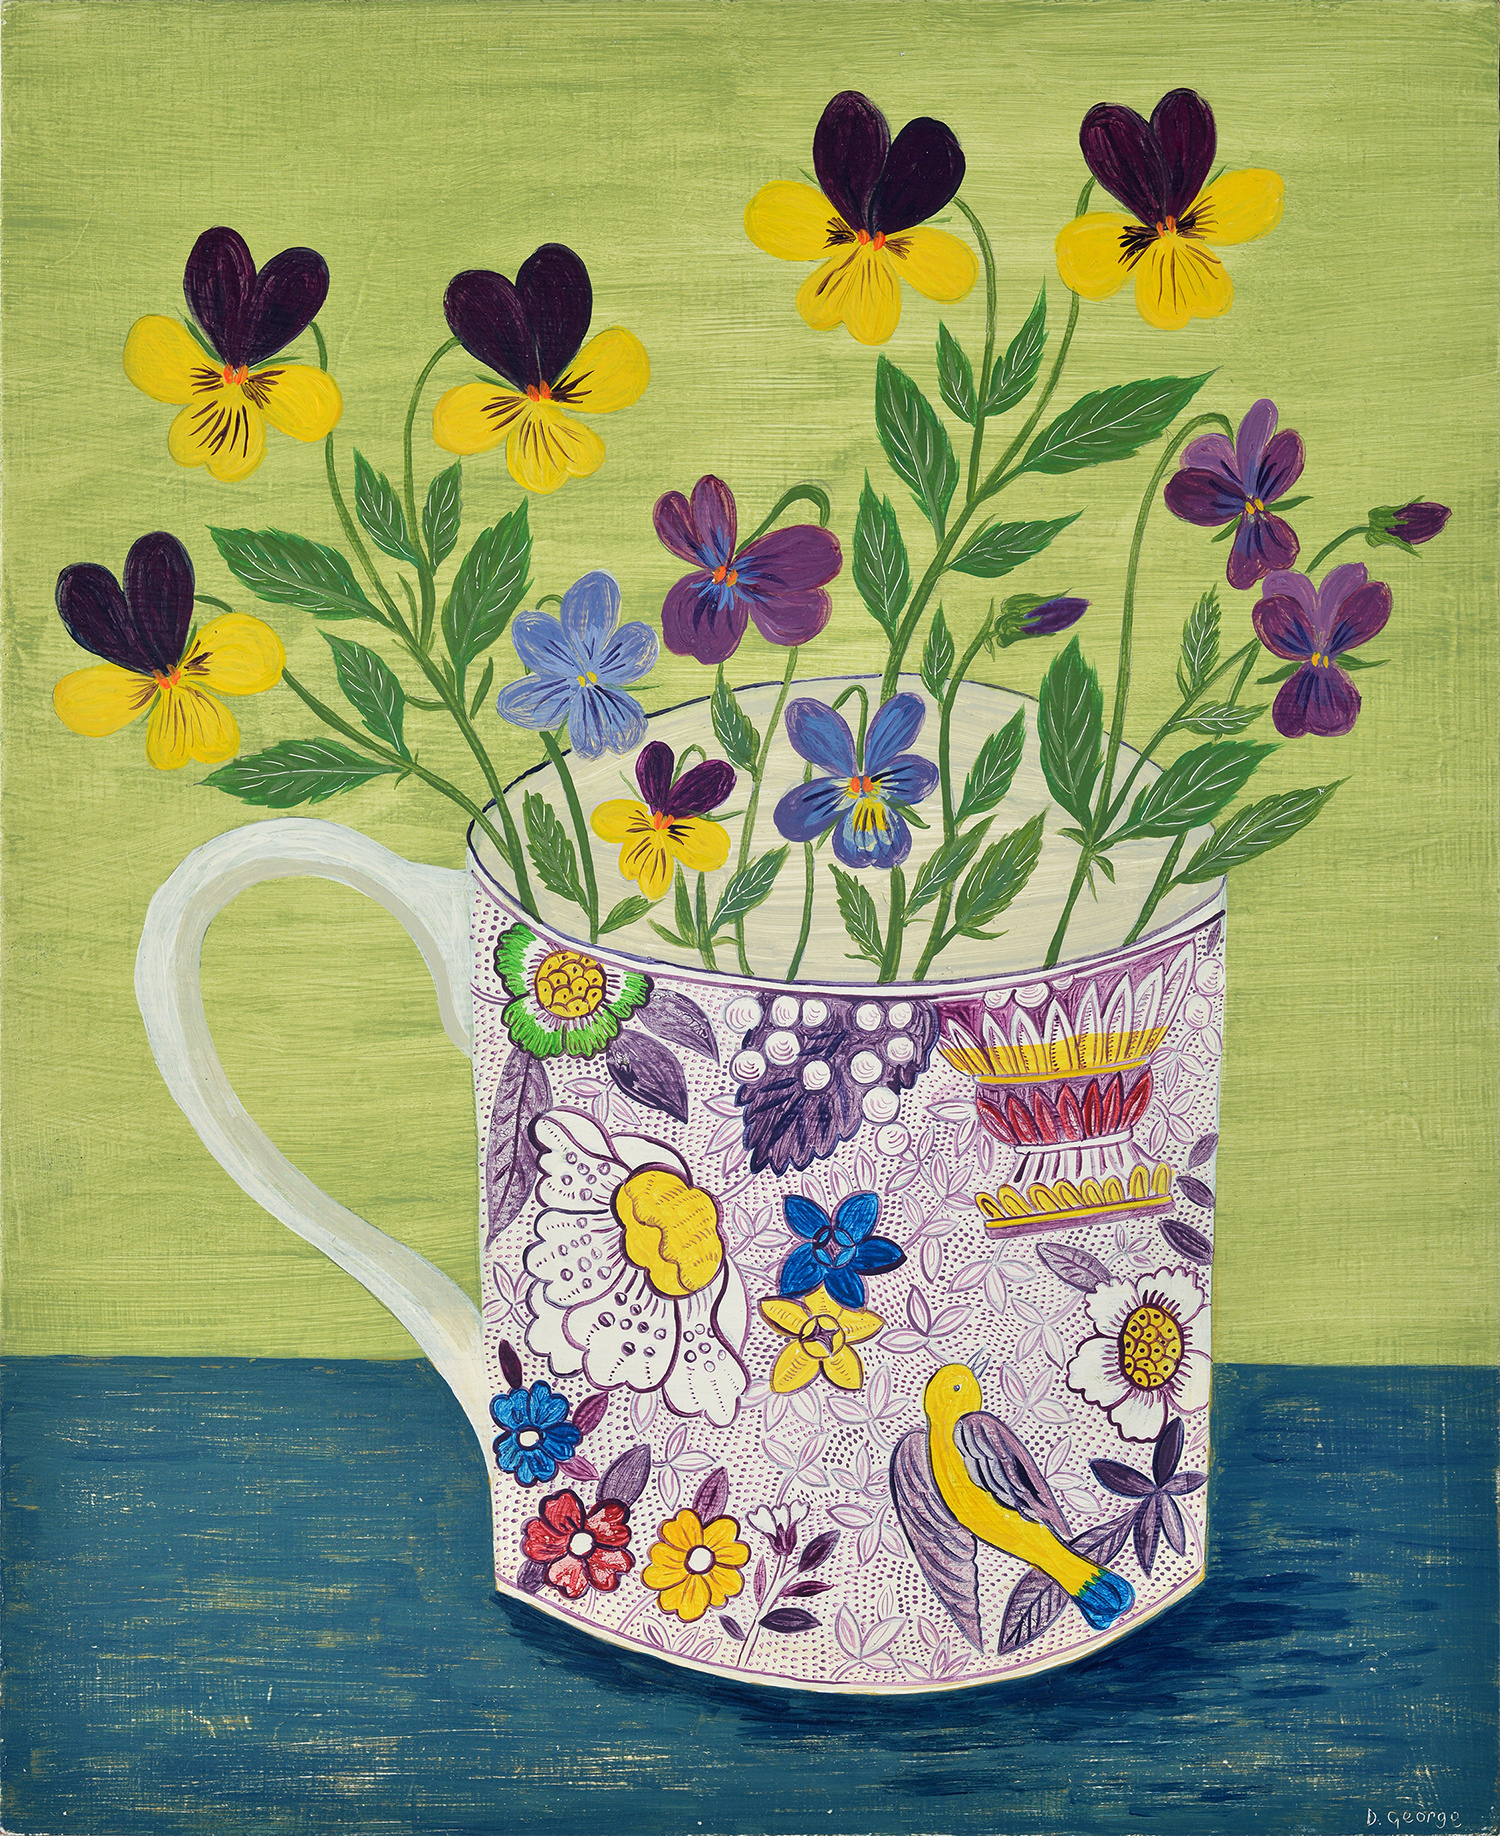 Bird Cup and Violas by Debbie George